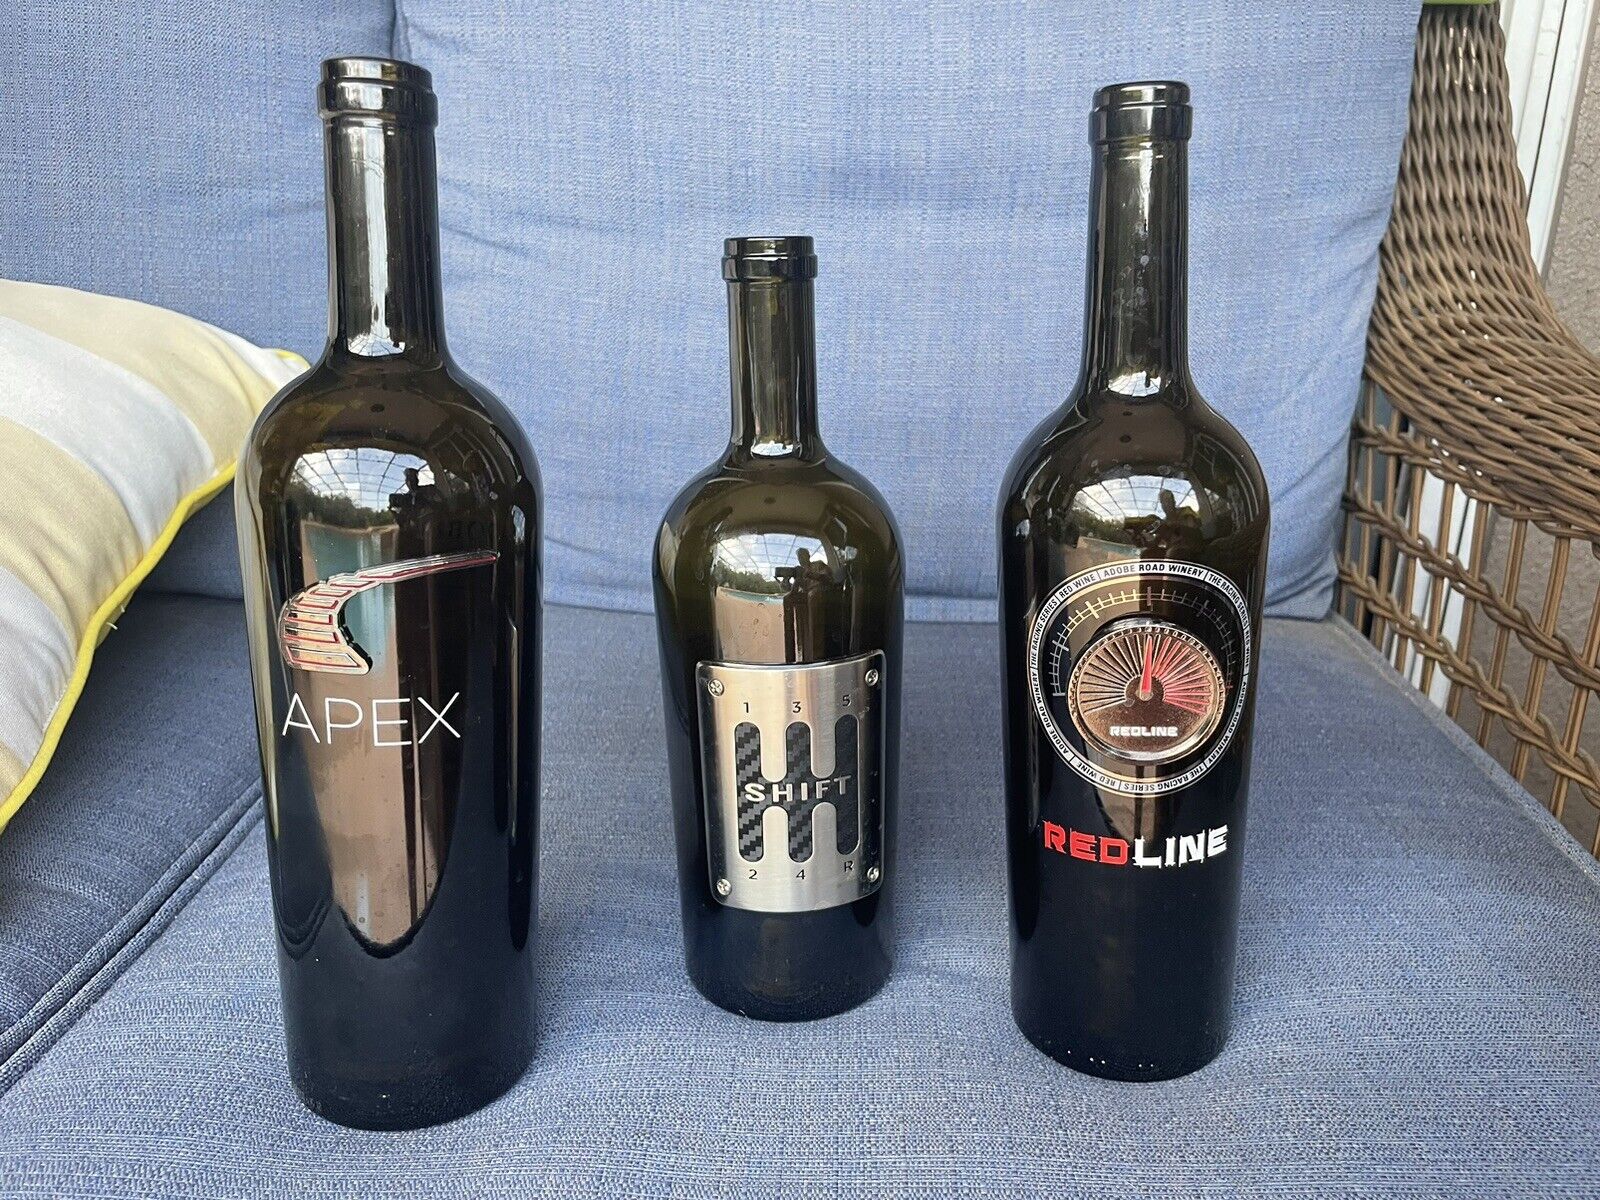 Lot of 3 Empty Wine Bottles Adobe Road Vineyard (Apex, Shift,  & Red Line)